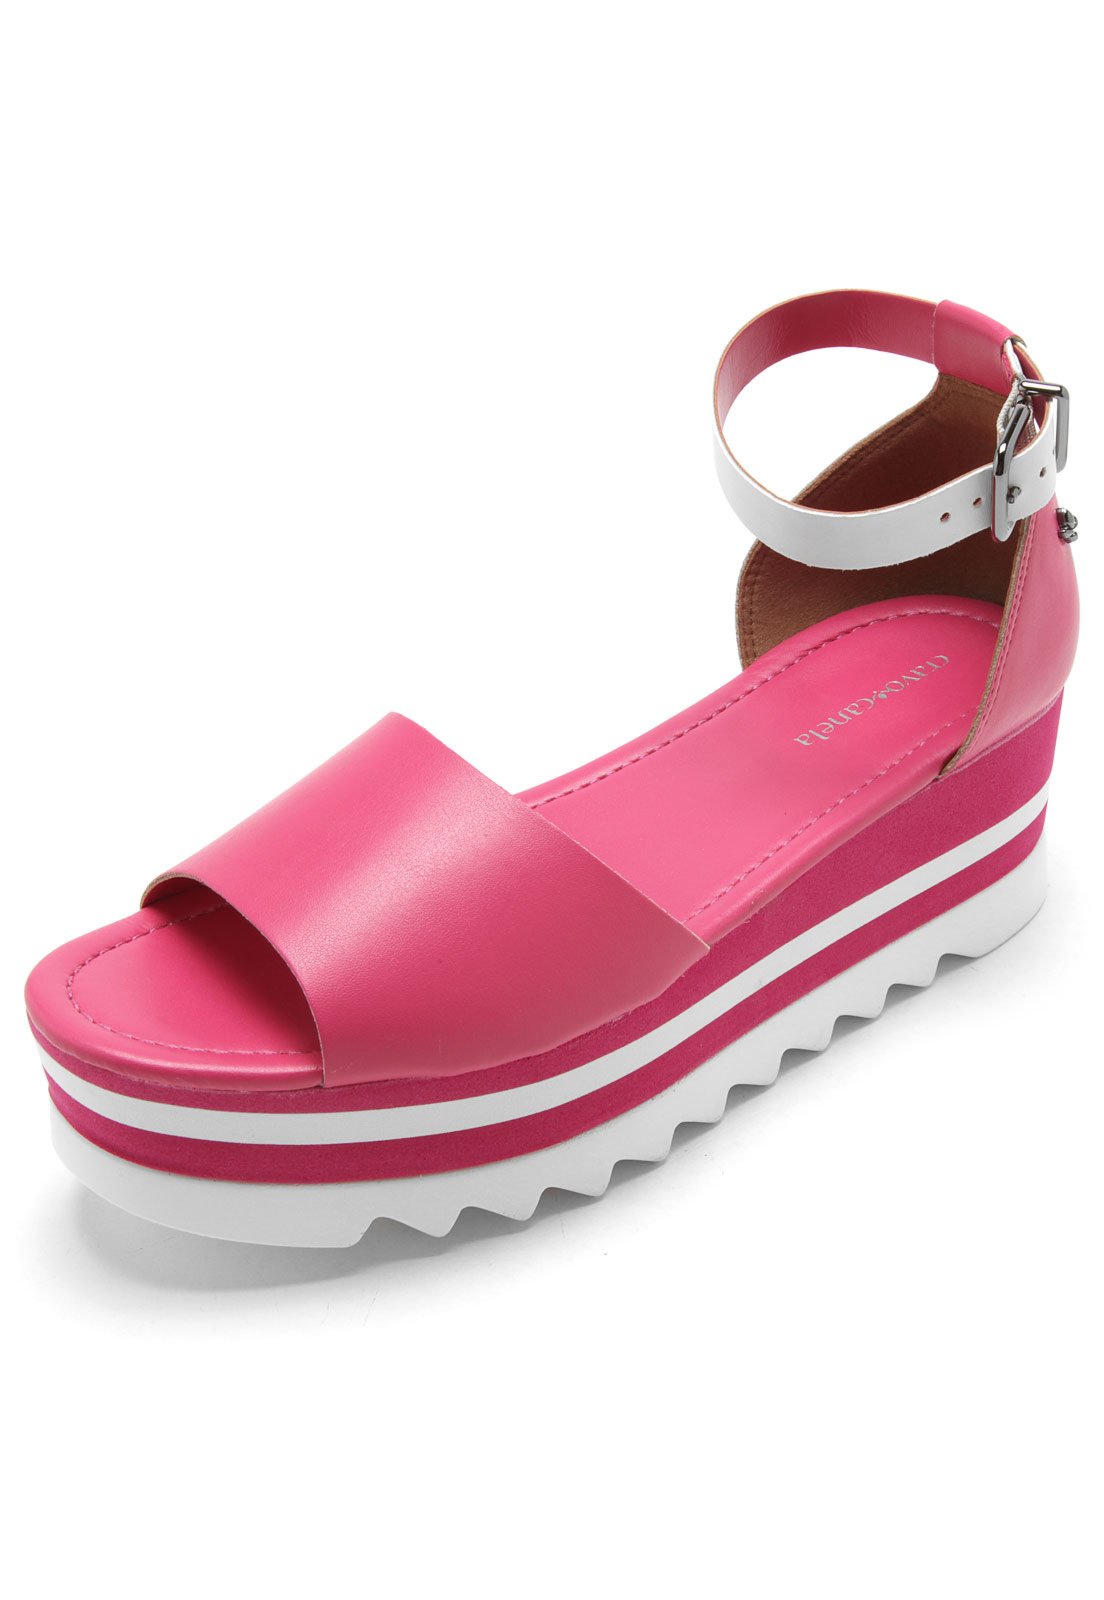 sandalia tratorada rosa